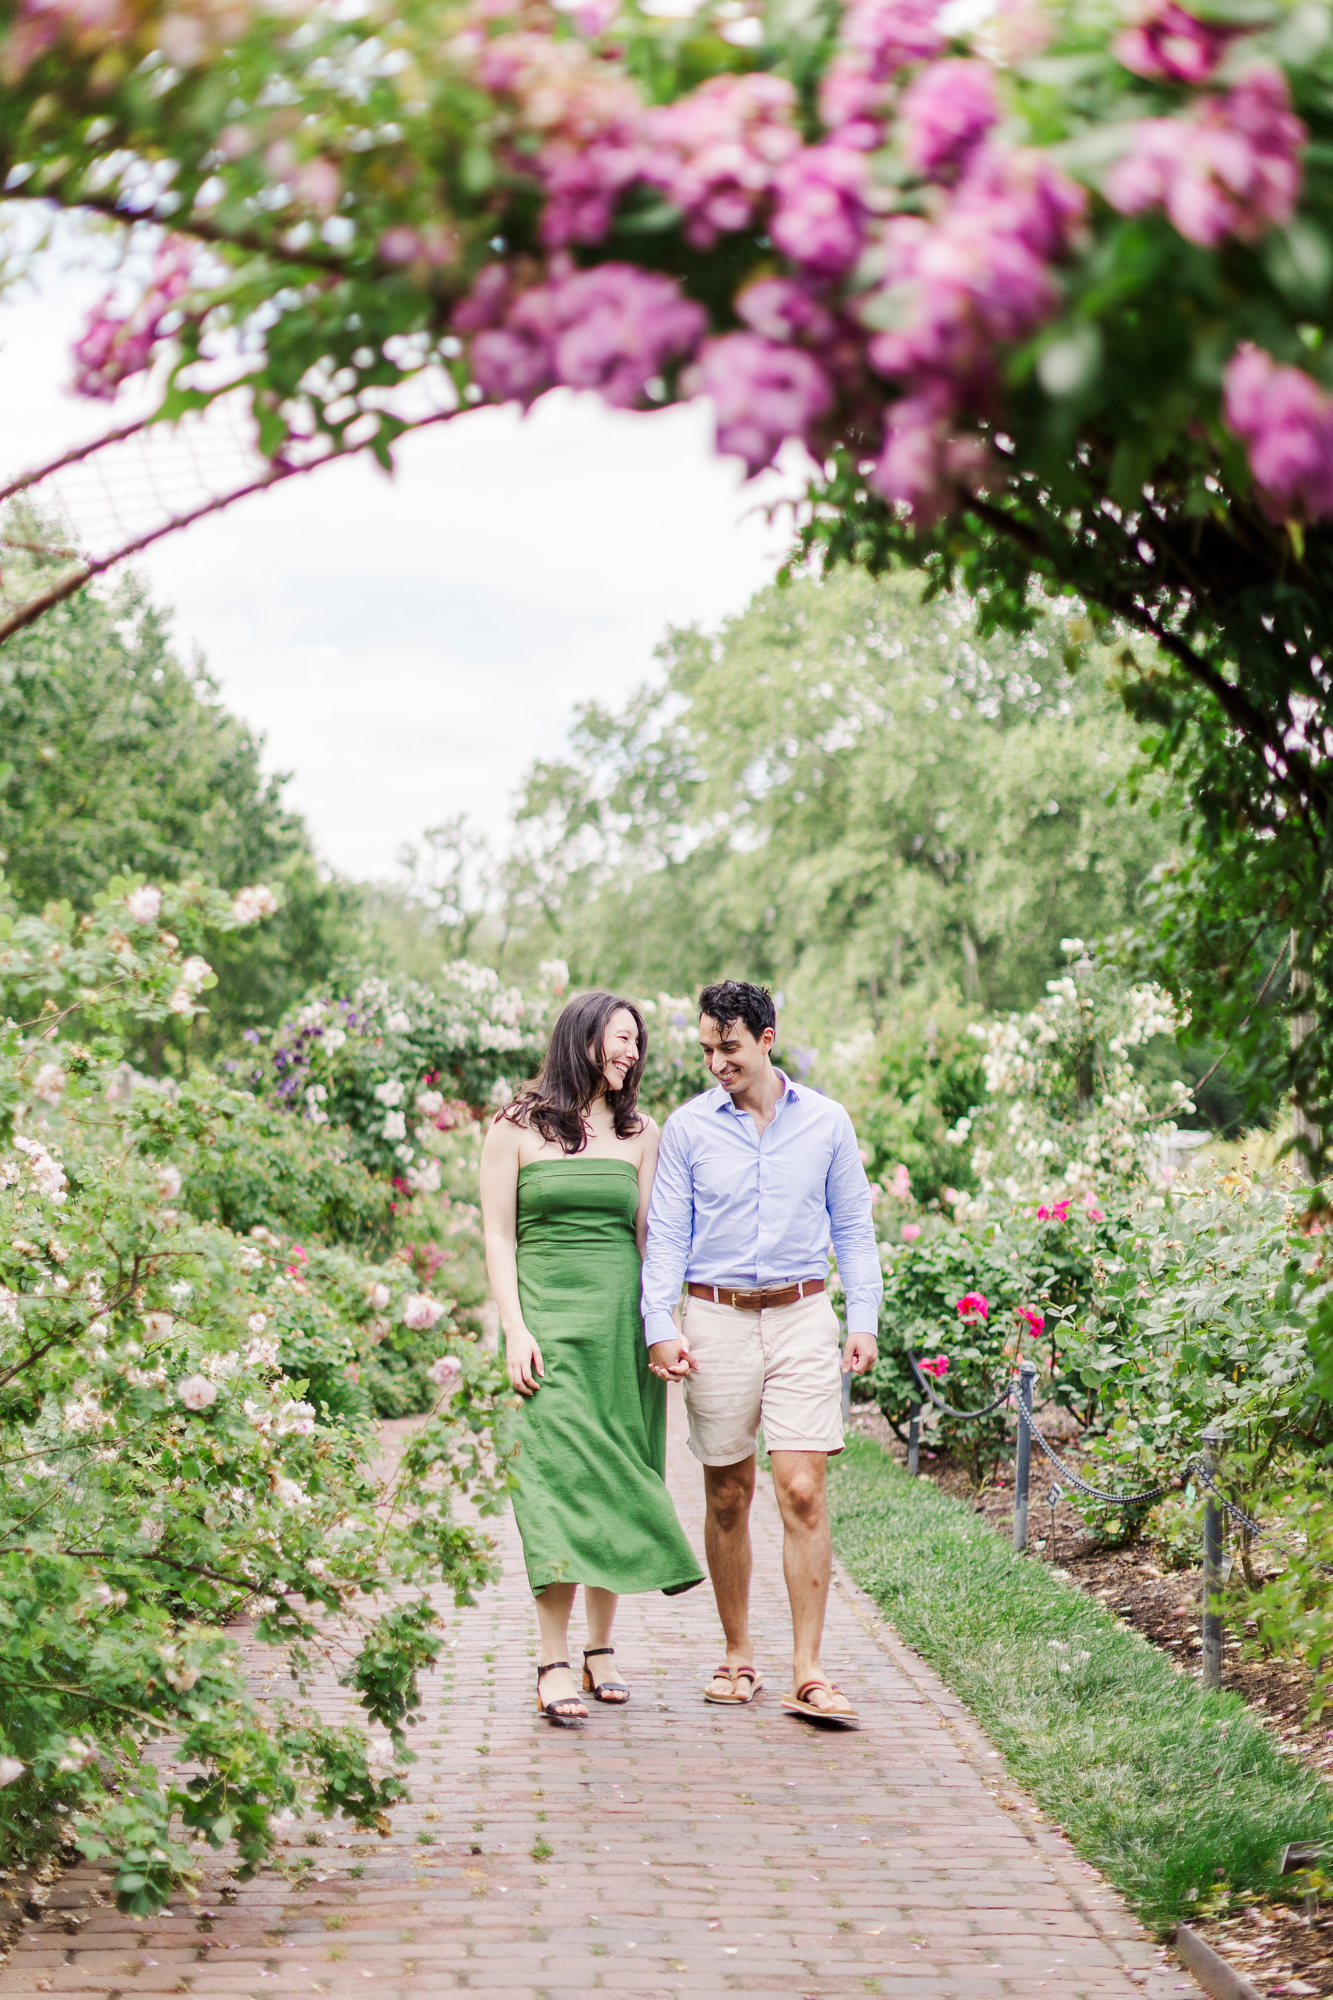 Lovely Brooklyn Botanic Garden engagement photos